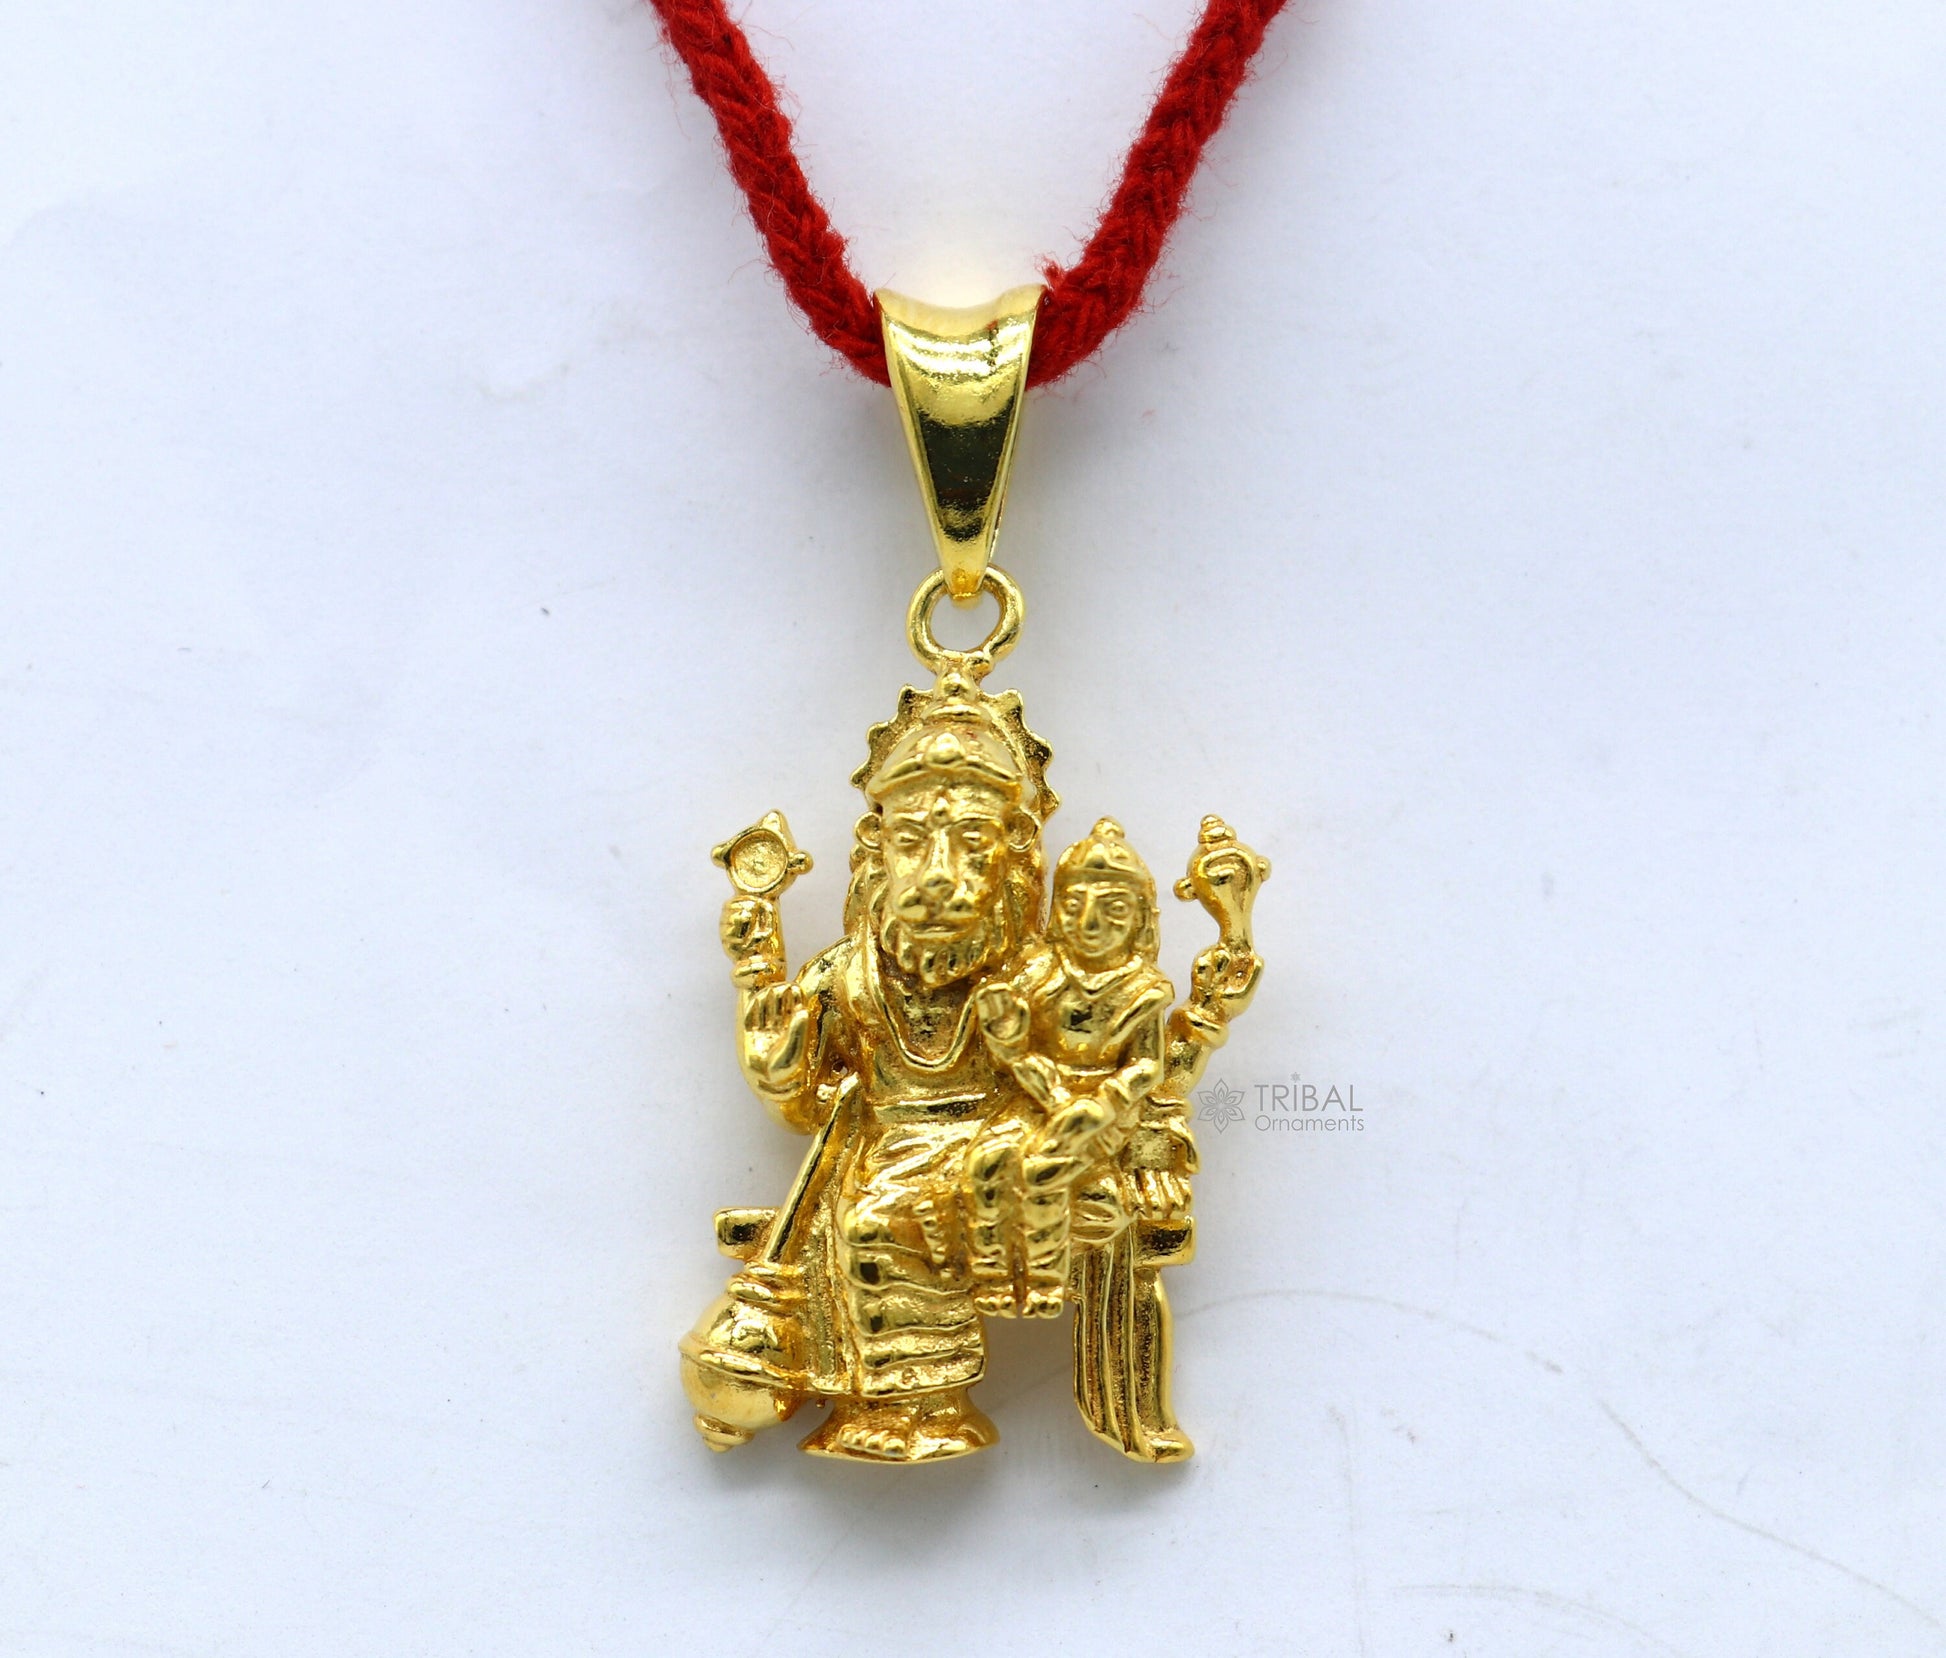 925 sterling silver handmade divine Vishnu with Laxmi (narsimha)pendant, amazing stylish unisex pendant personalized jewelry nsp603 - TRIBAL ORNAMENTS